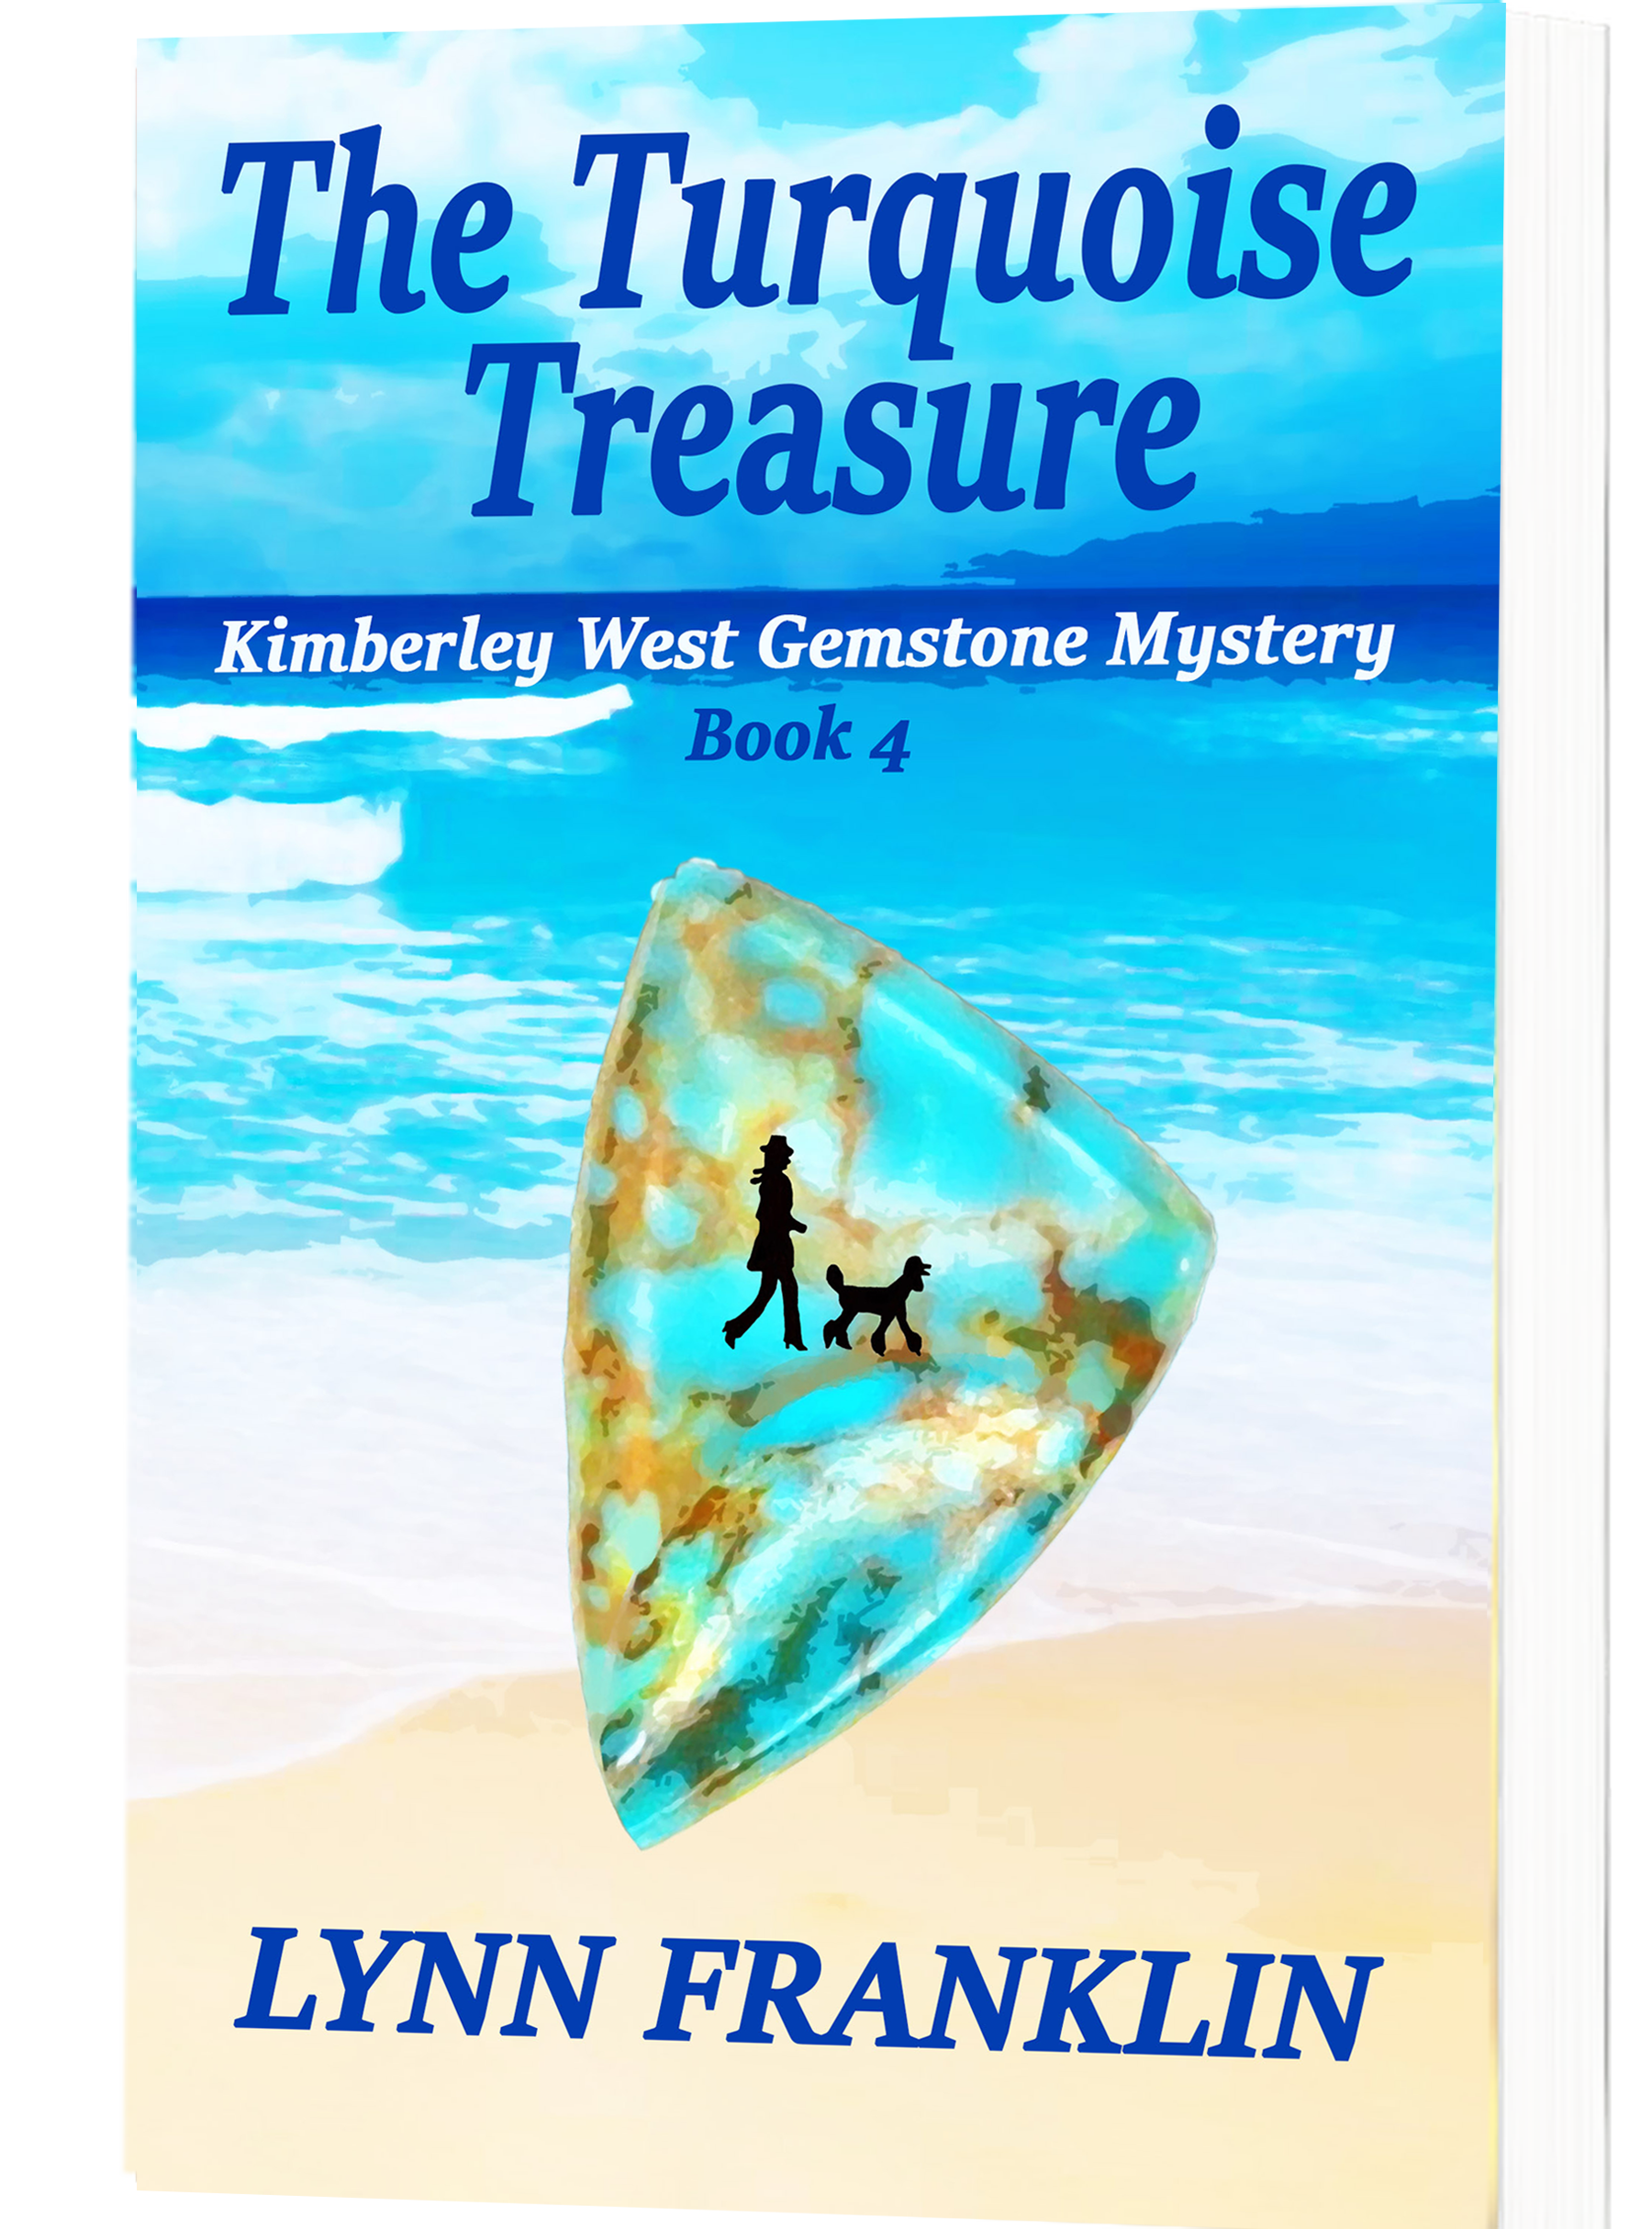 The Turquoise Treasure: Kimberley West Gemstone Mystery #4